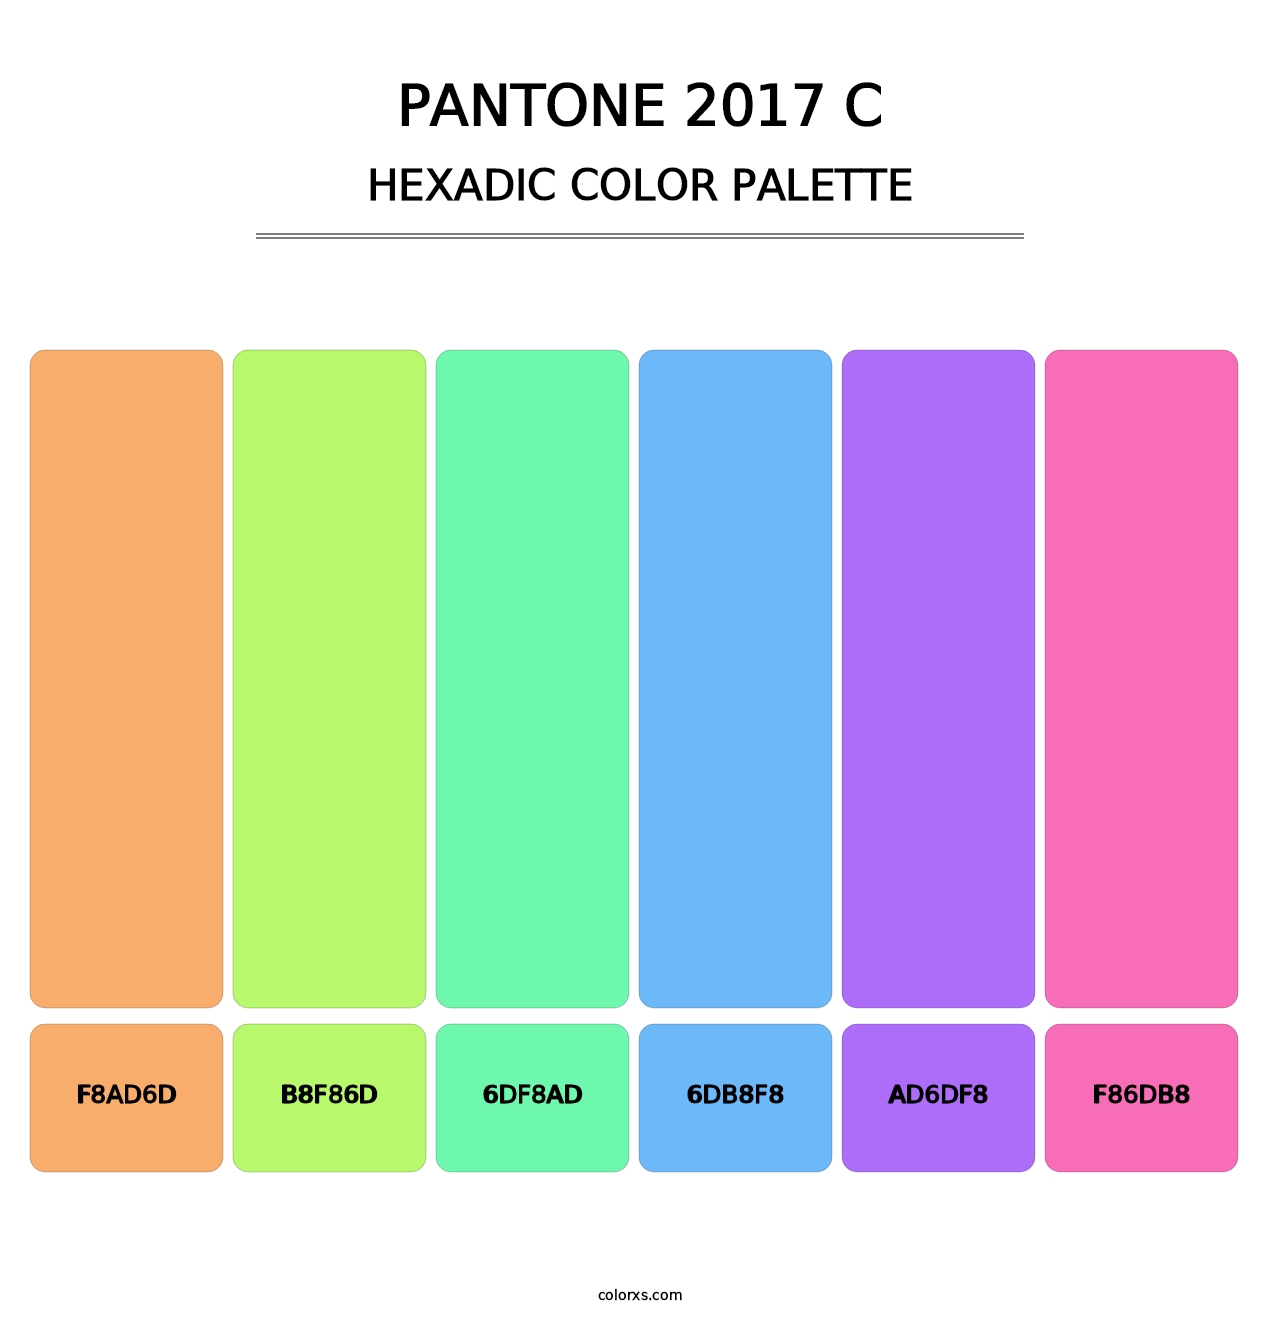 PANTONE 2017 C - Hexadic Color Palette